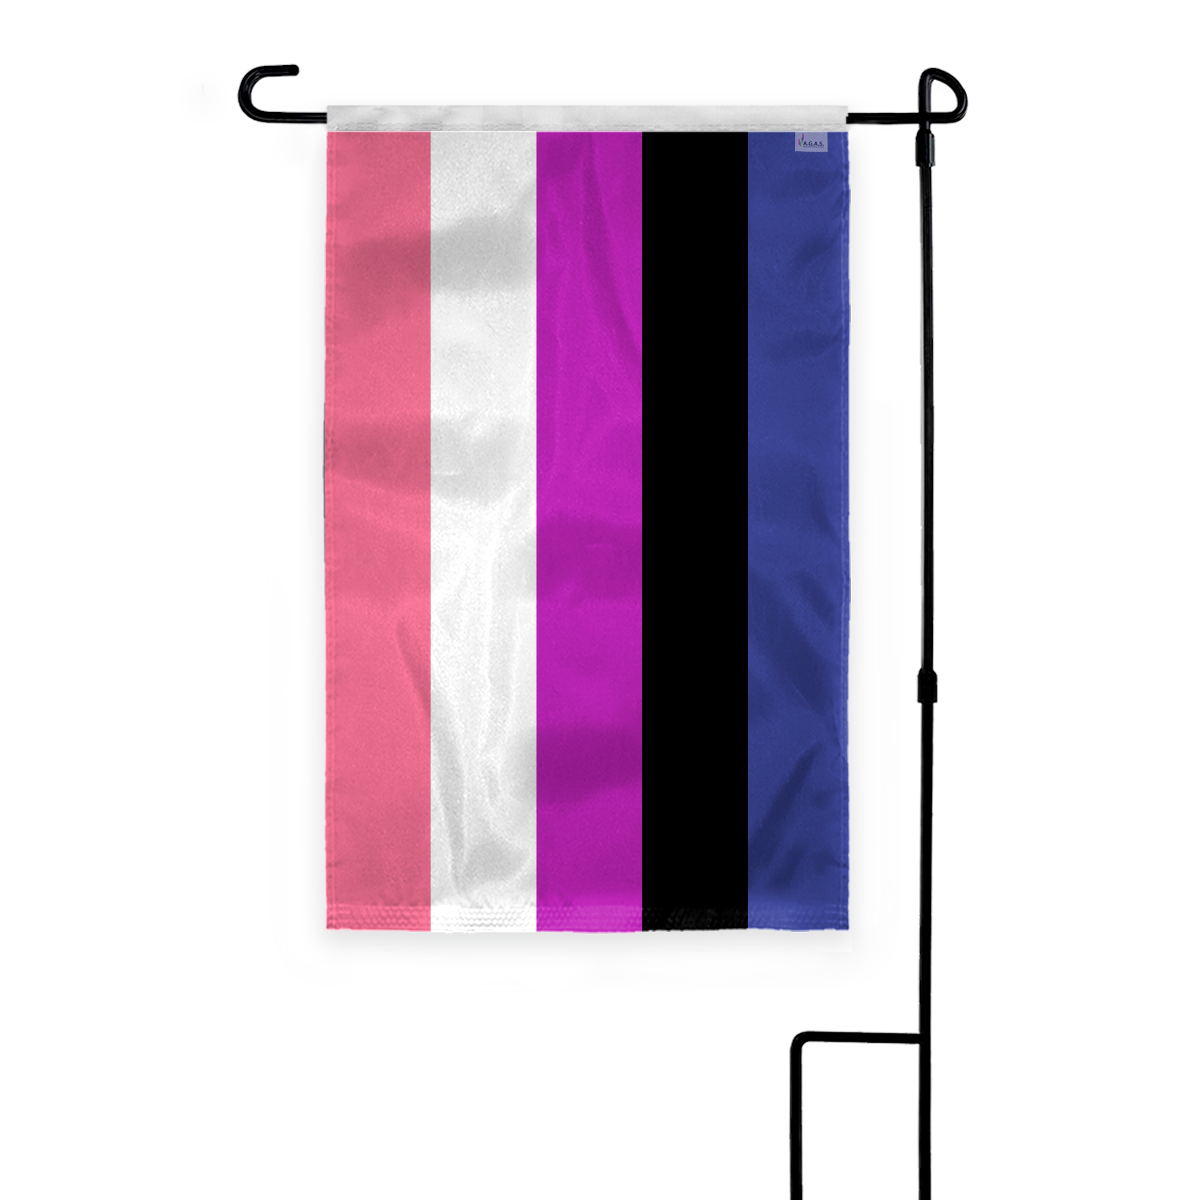 AGAS Genderfluid Applique & Embroidered Garden Flag 12"x18" inch